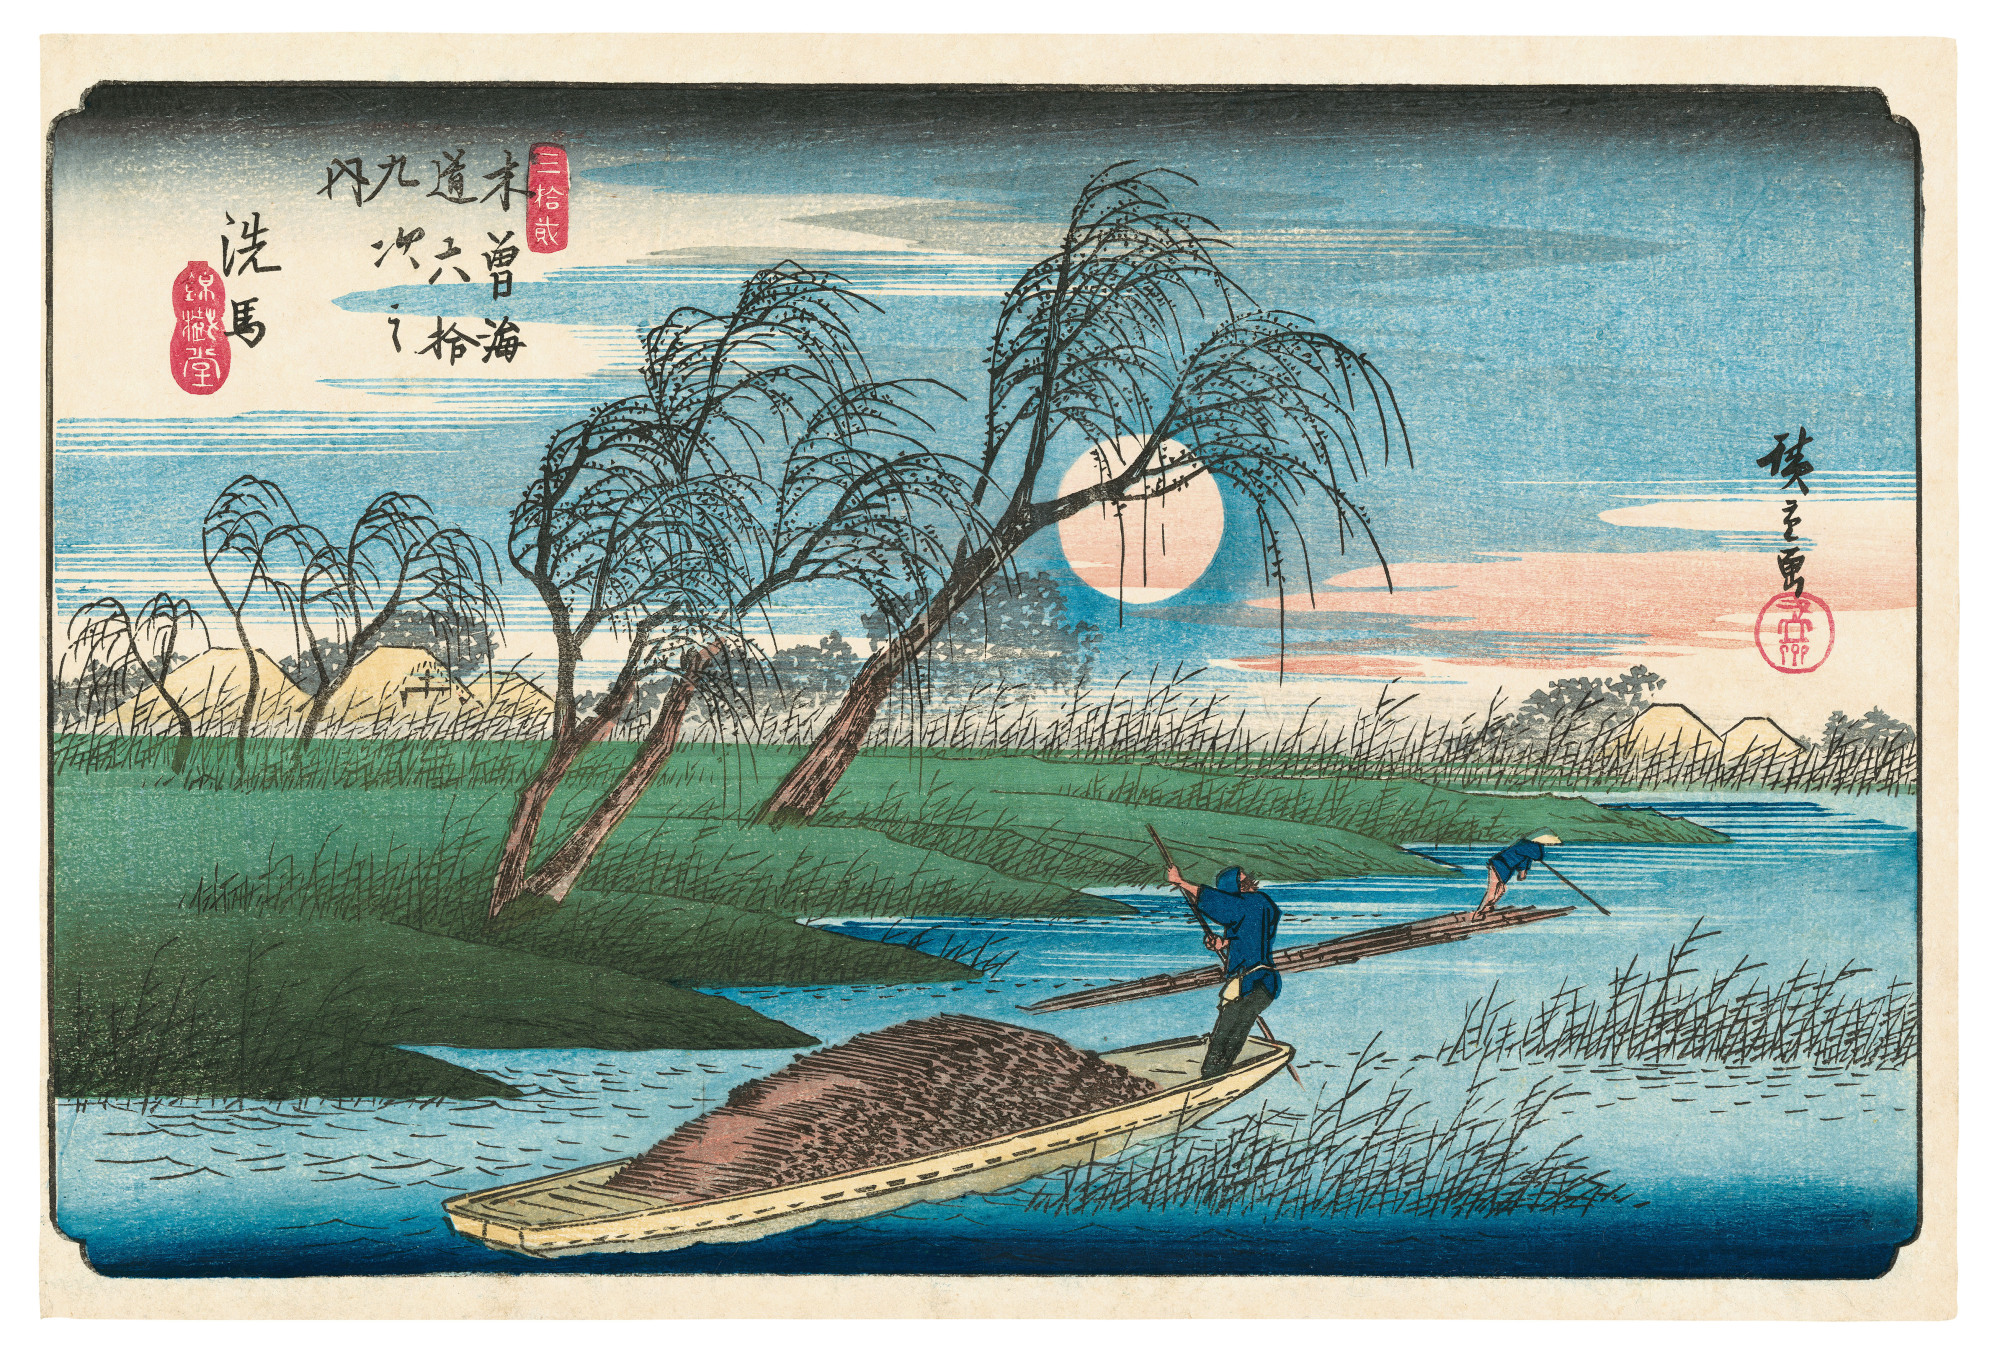 Japanese Woodblock Prints': Mass entertainment began with humble woodblock - The Japan Times